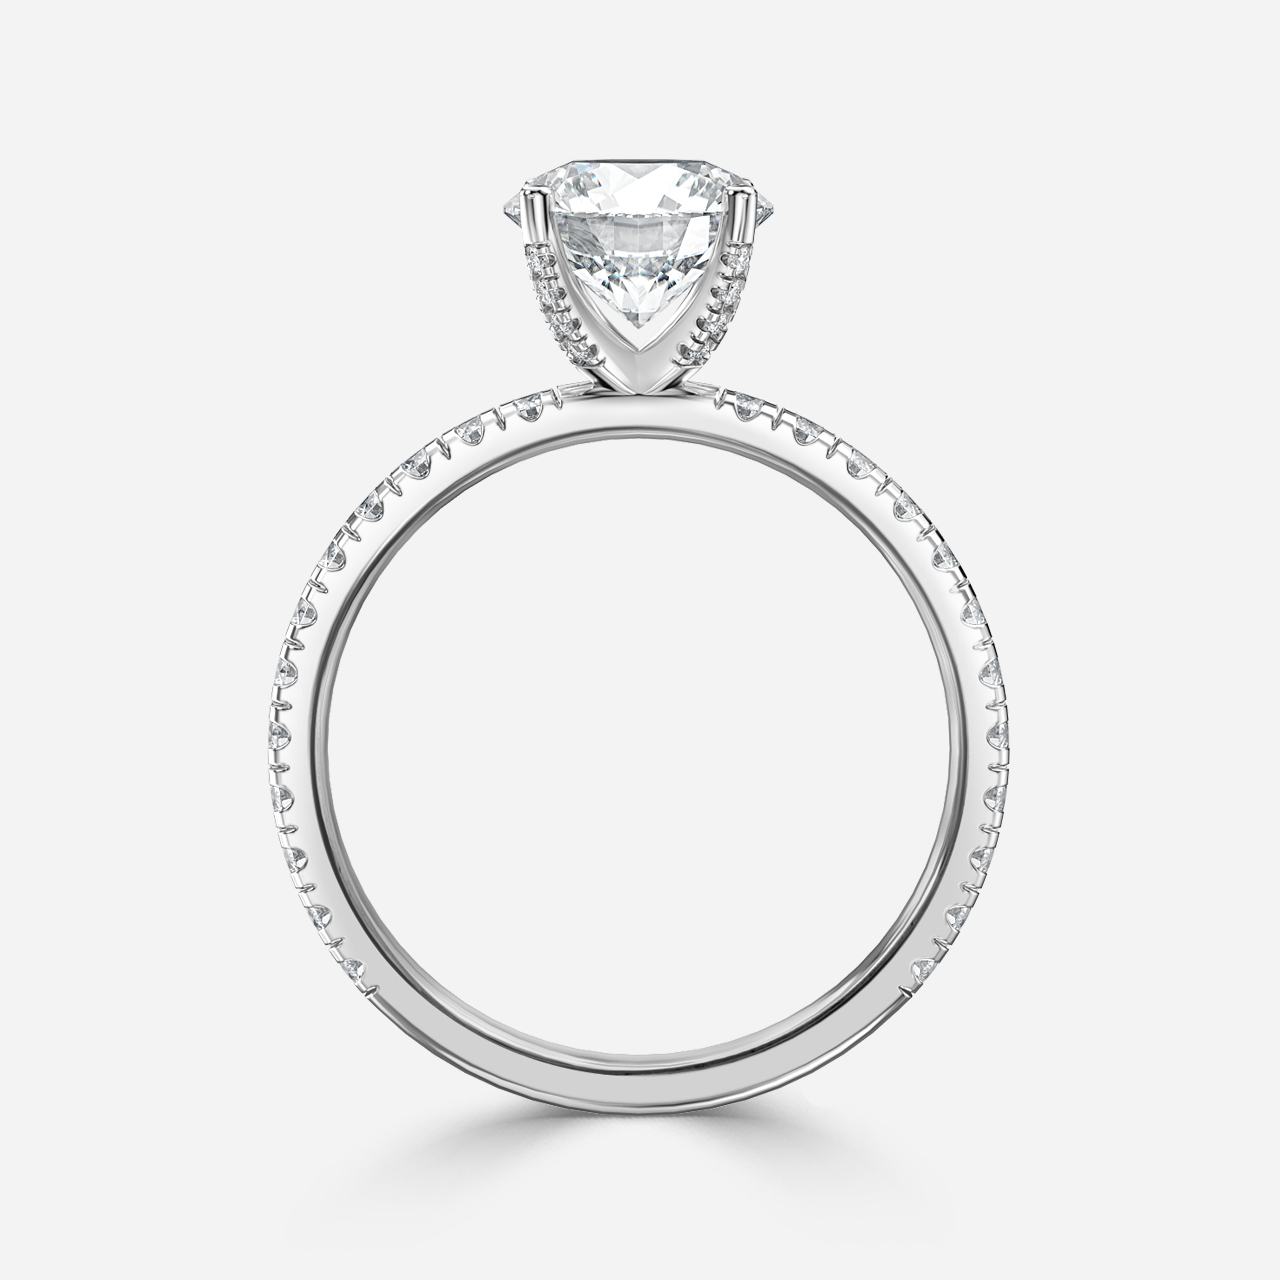 Sofia White Gold Unique Engagement Ring